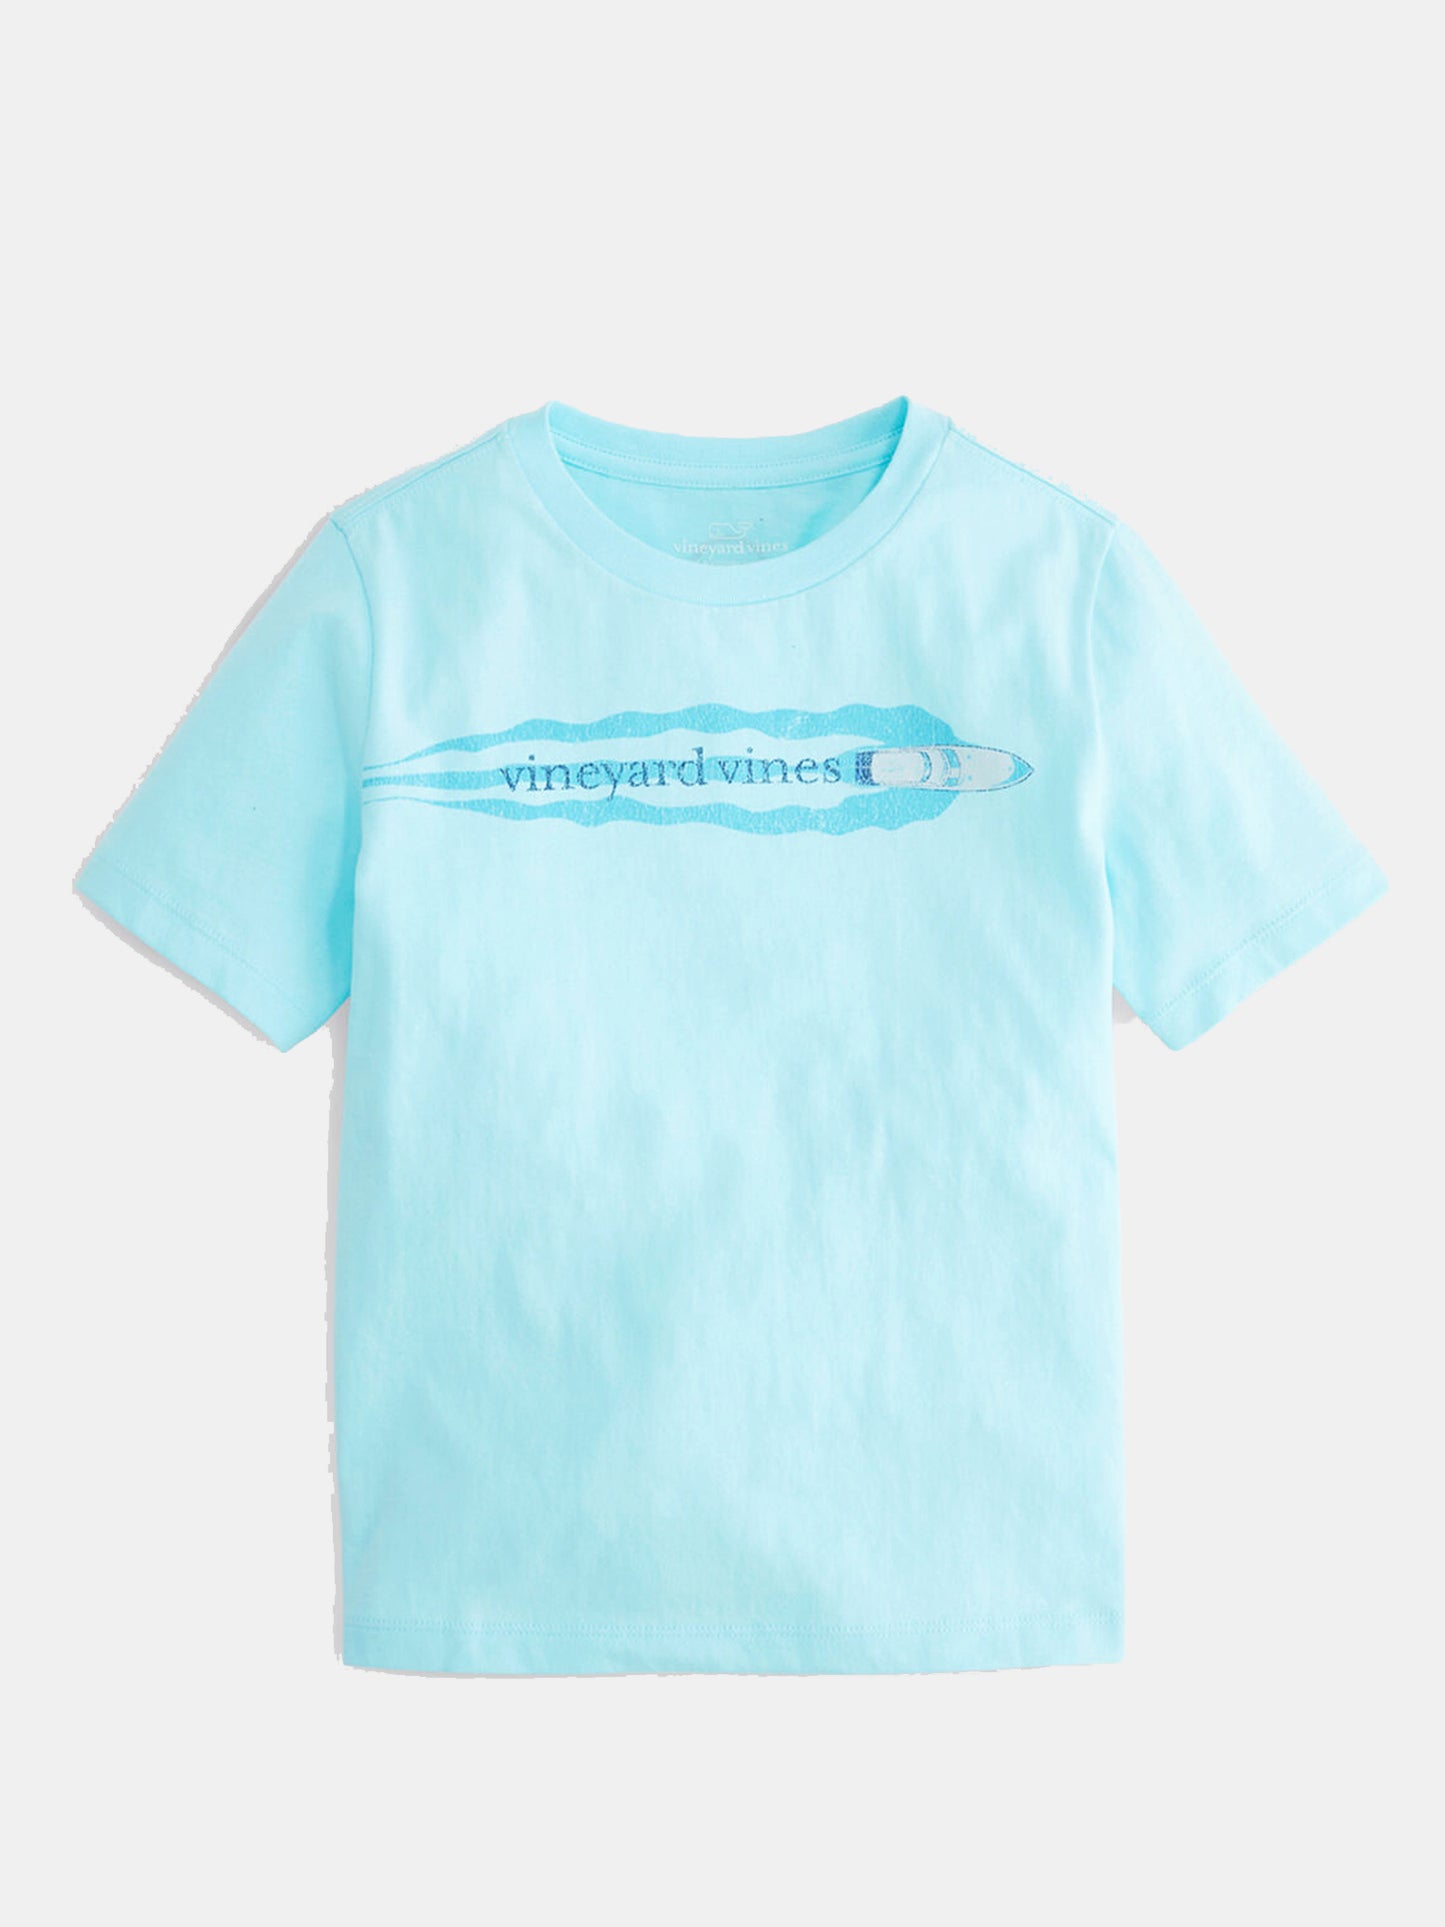 Vineyard Vines Boys' Aerial Sport Fisher T Shirt